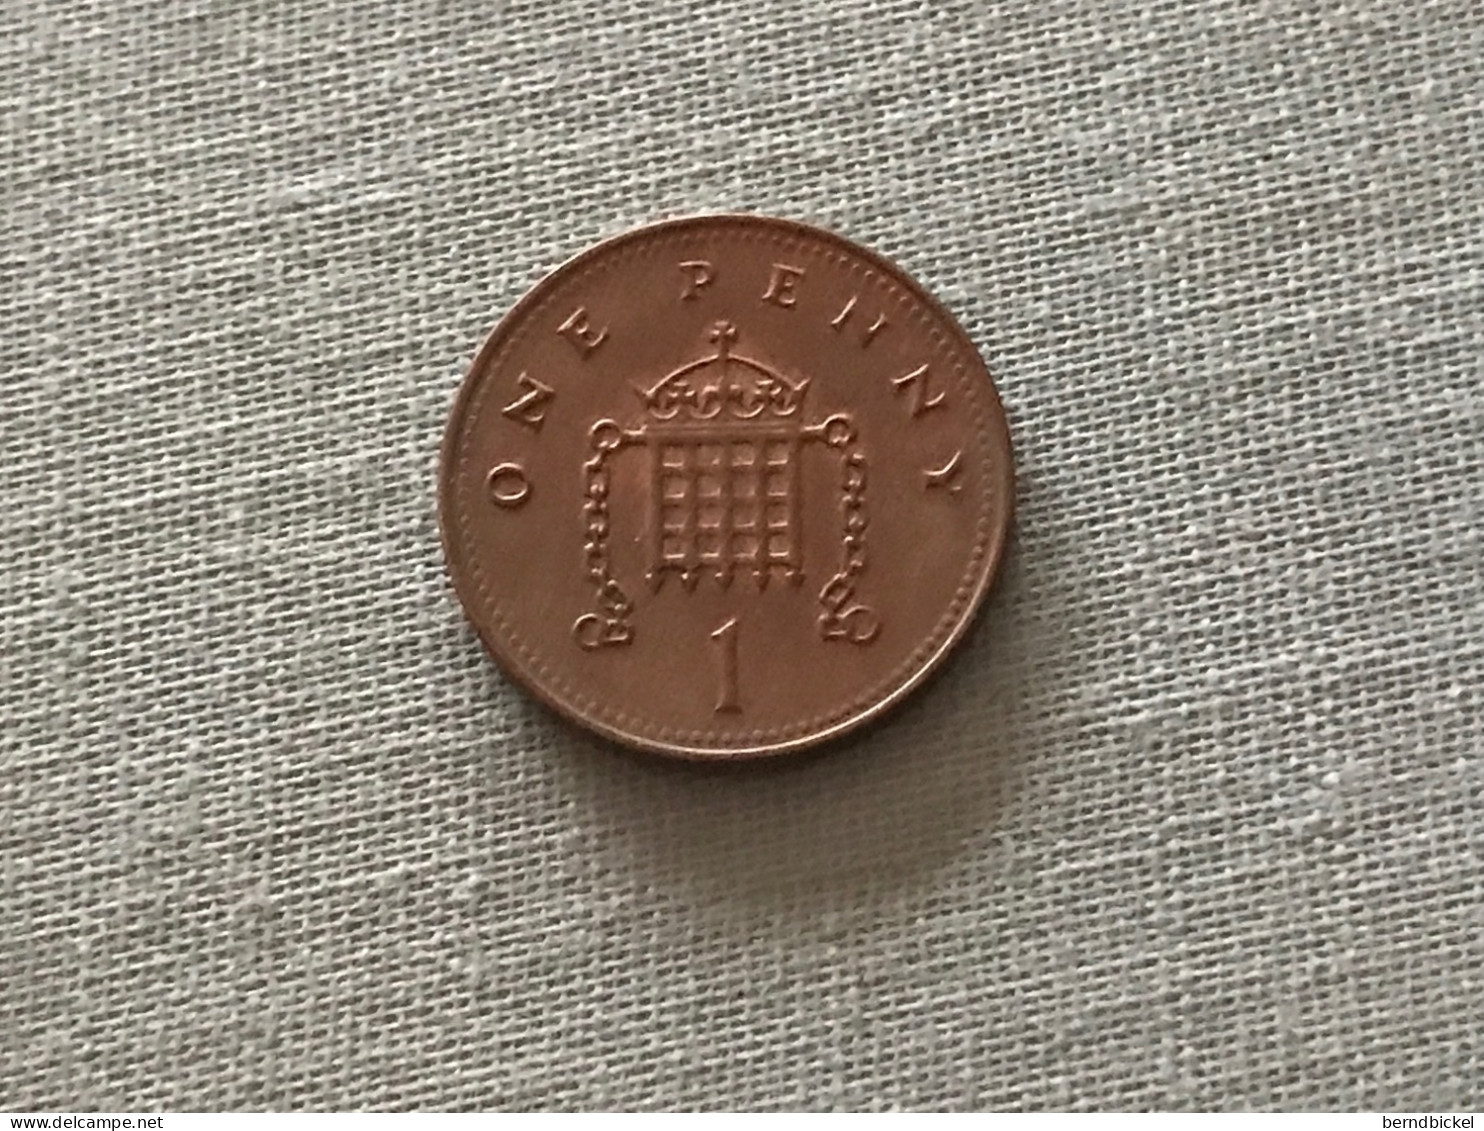 Münzen Münze Umlaufmünze Großbritannien 1 Pence 2006 - 1 Penny & 1 New Penny